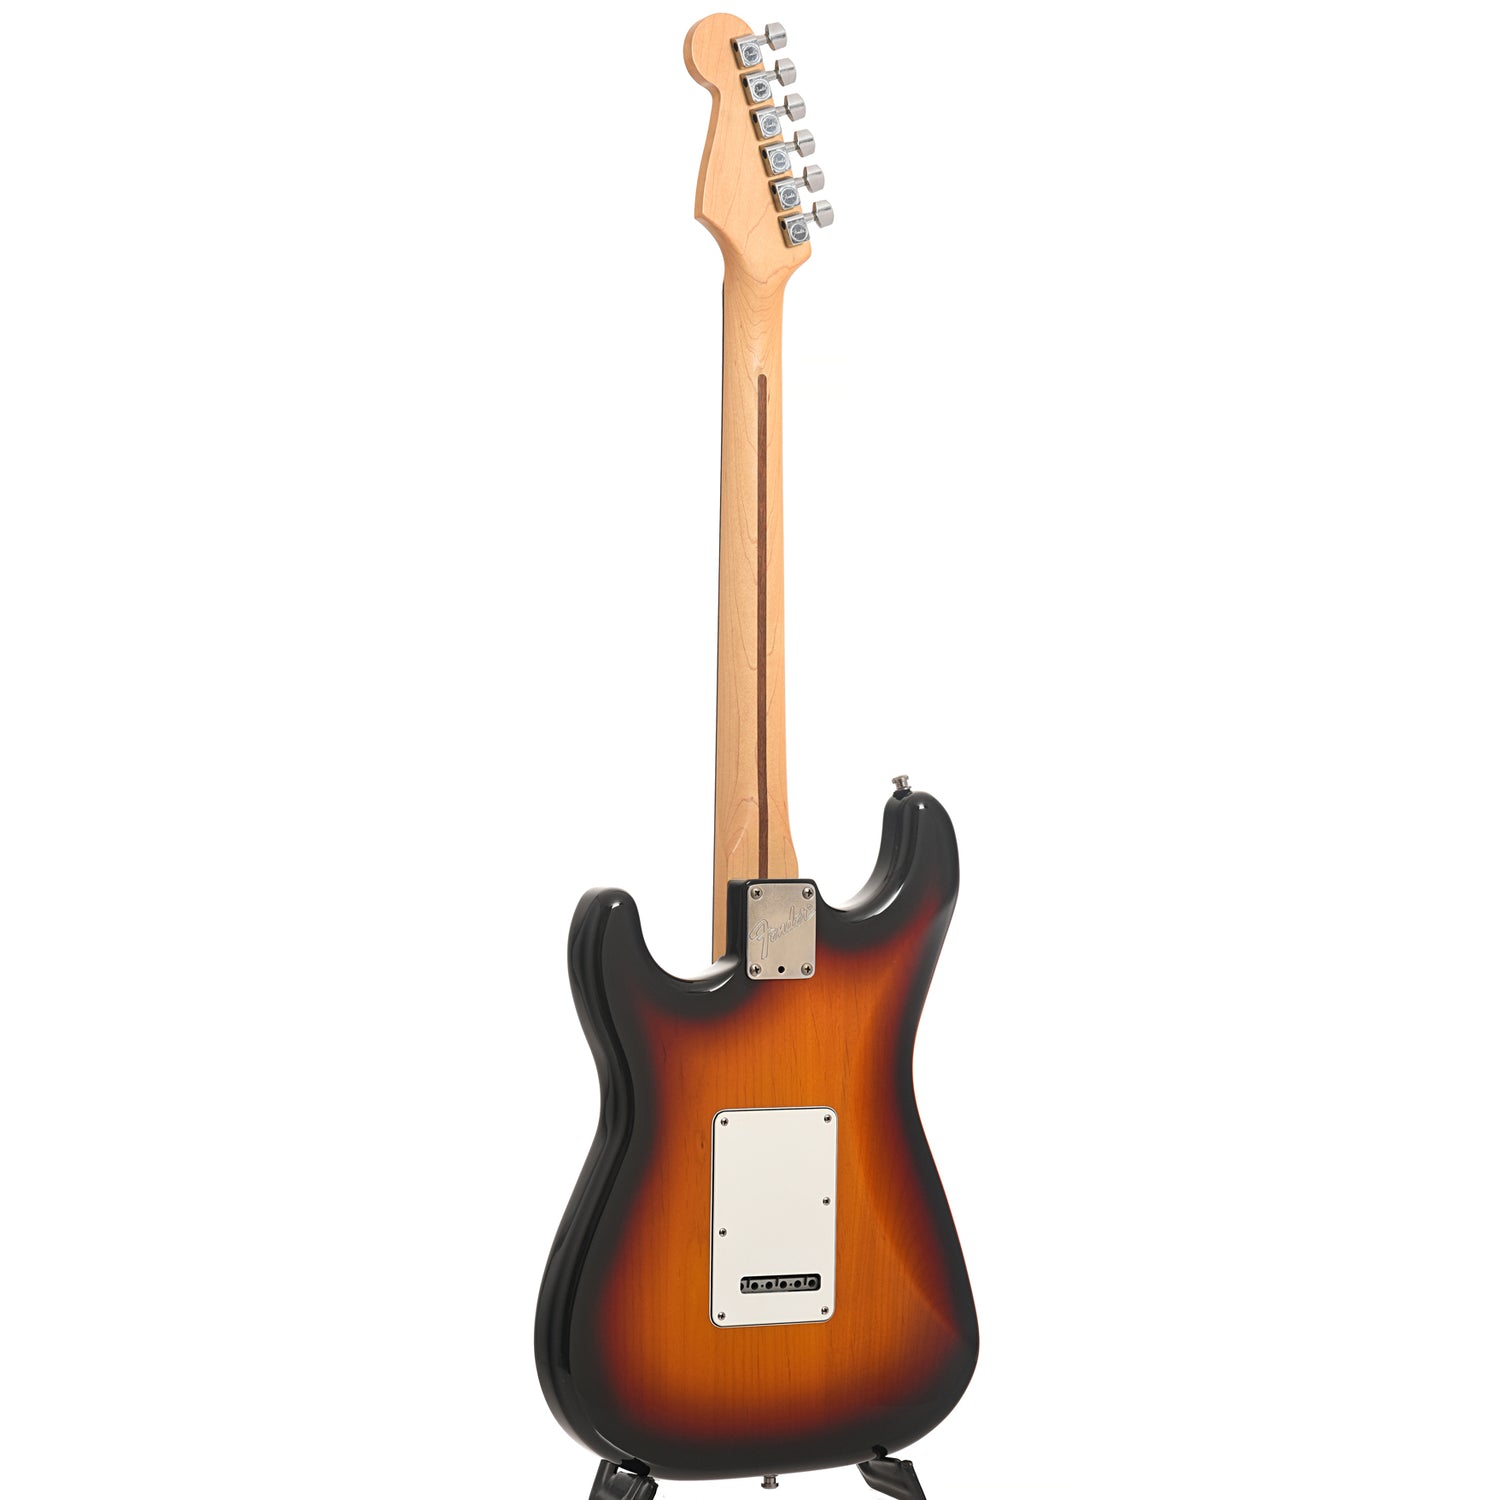 Full back and side of Fender American Standard Stratocaster